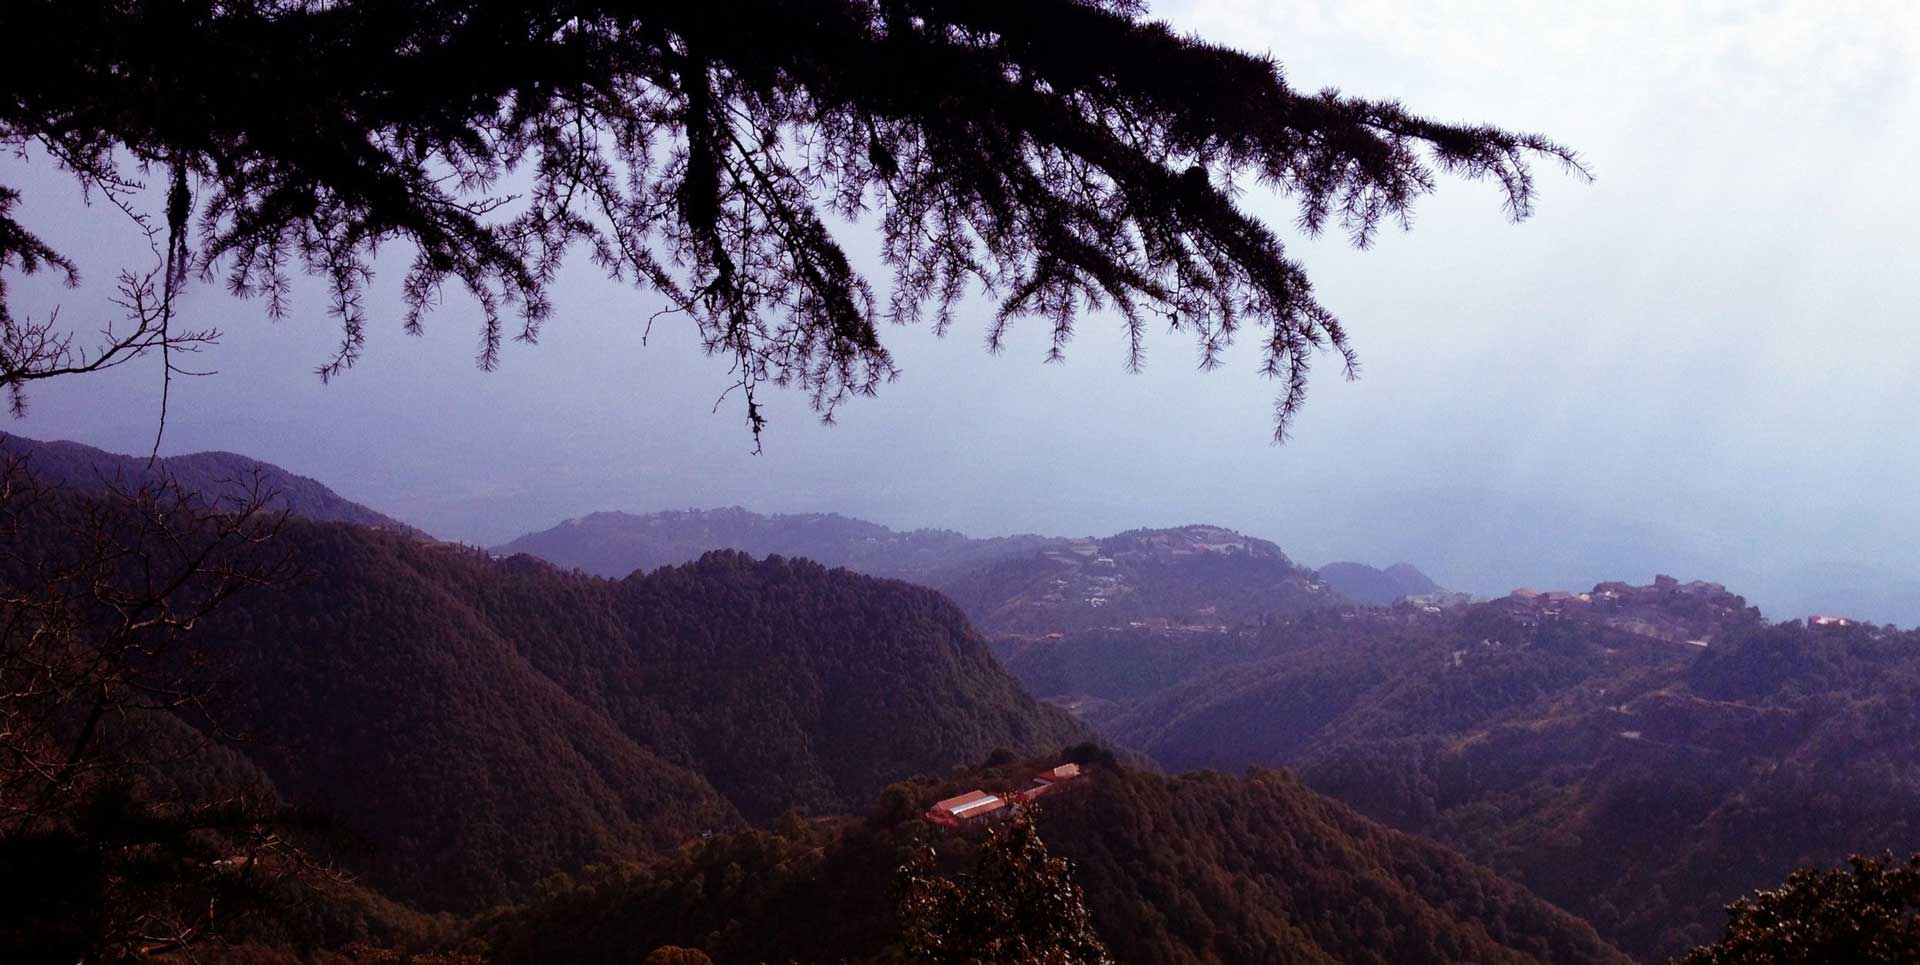 Mussoorie, Uttarakhand, India